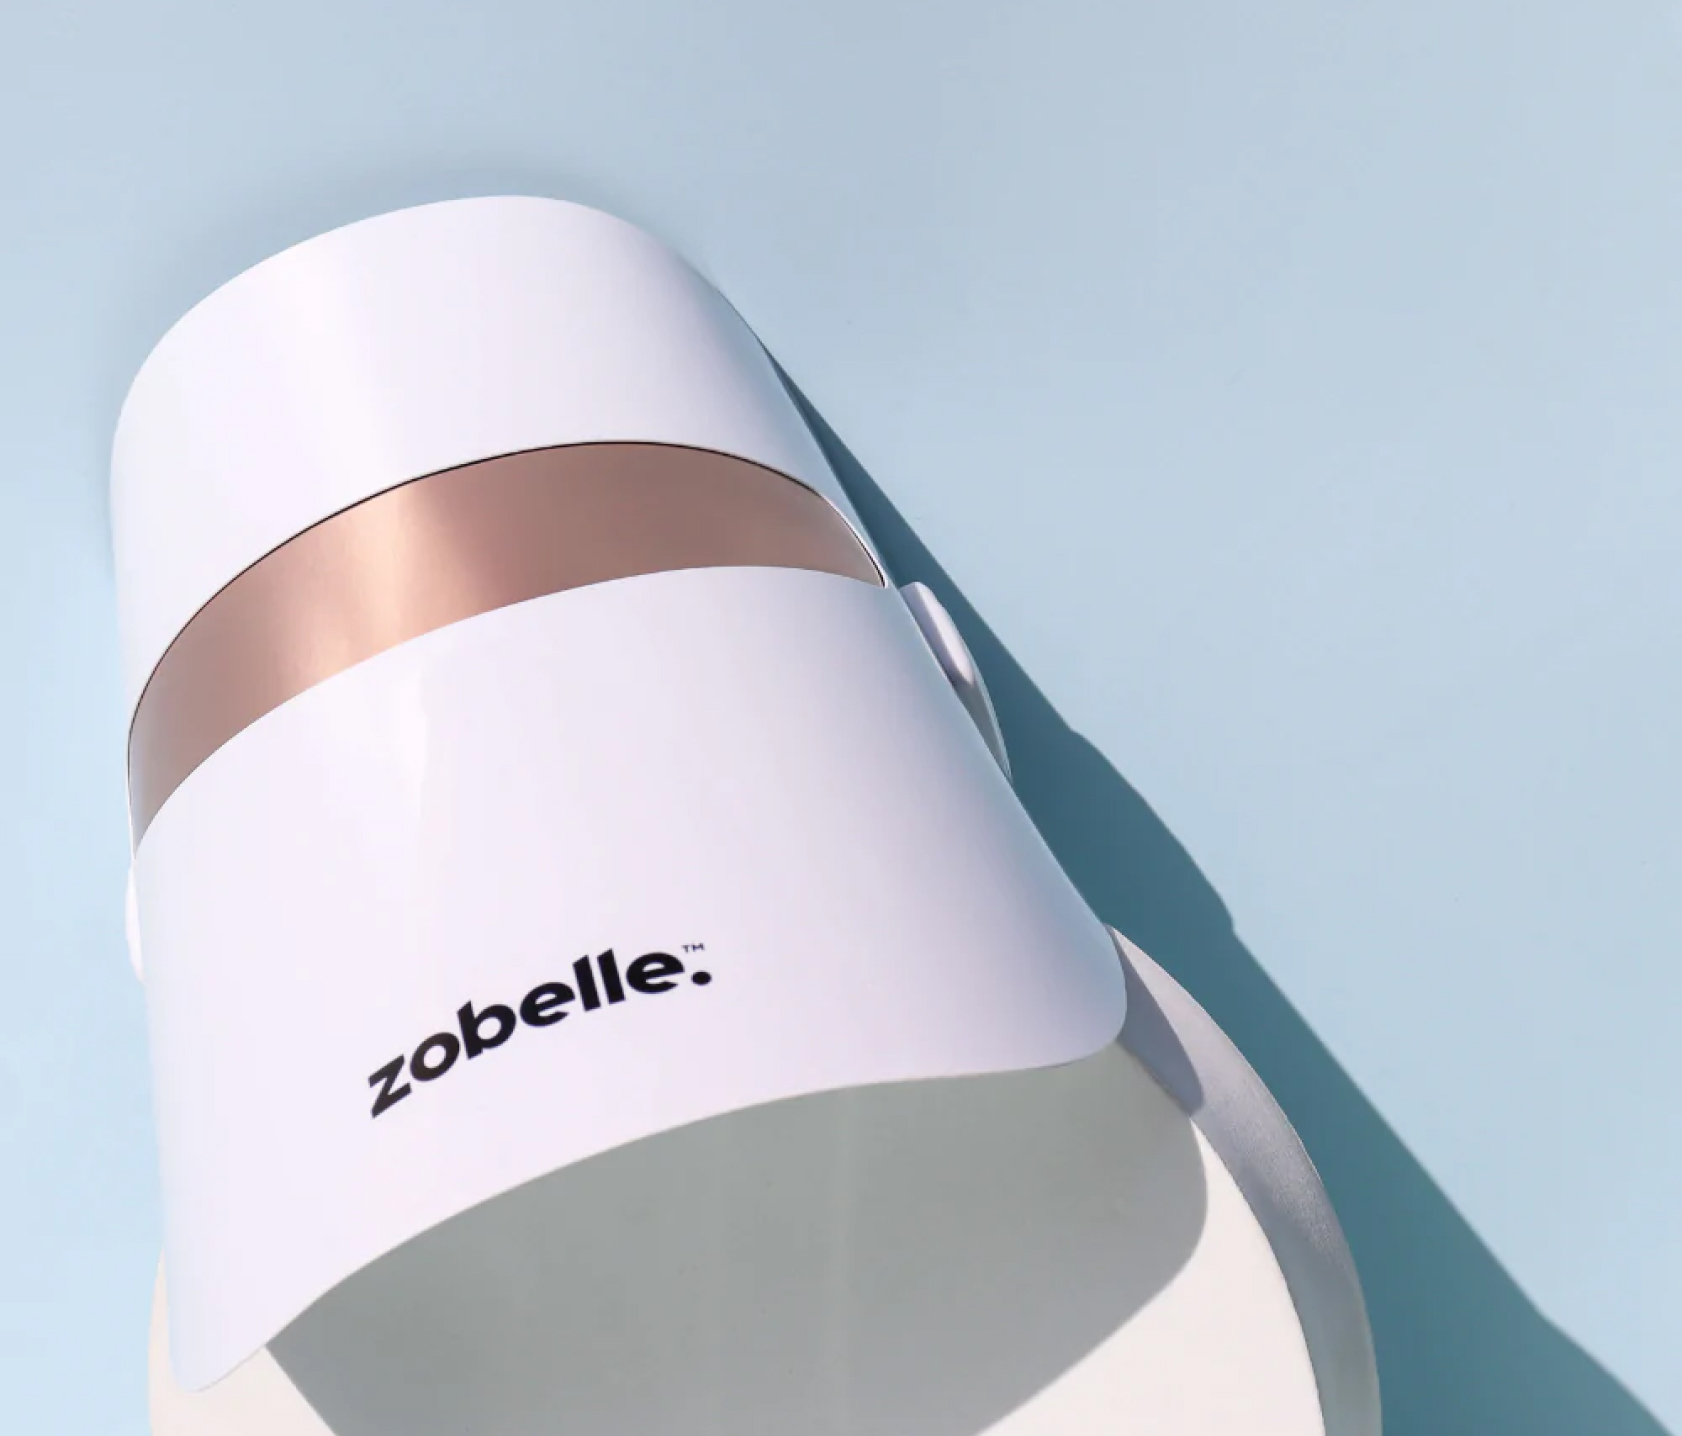 Zobelle Brand Development & Packaging Design by TL Design Co.